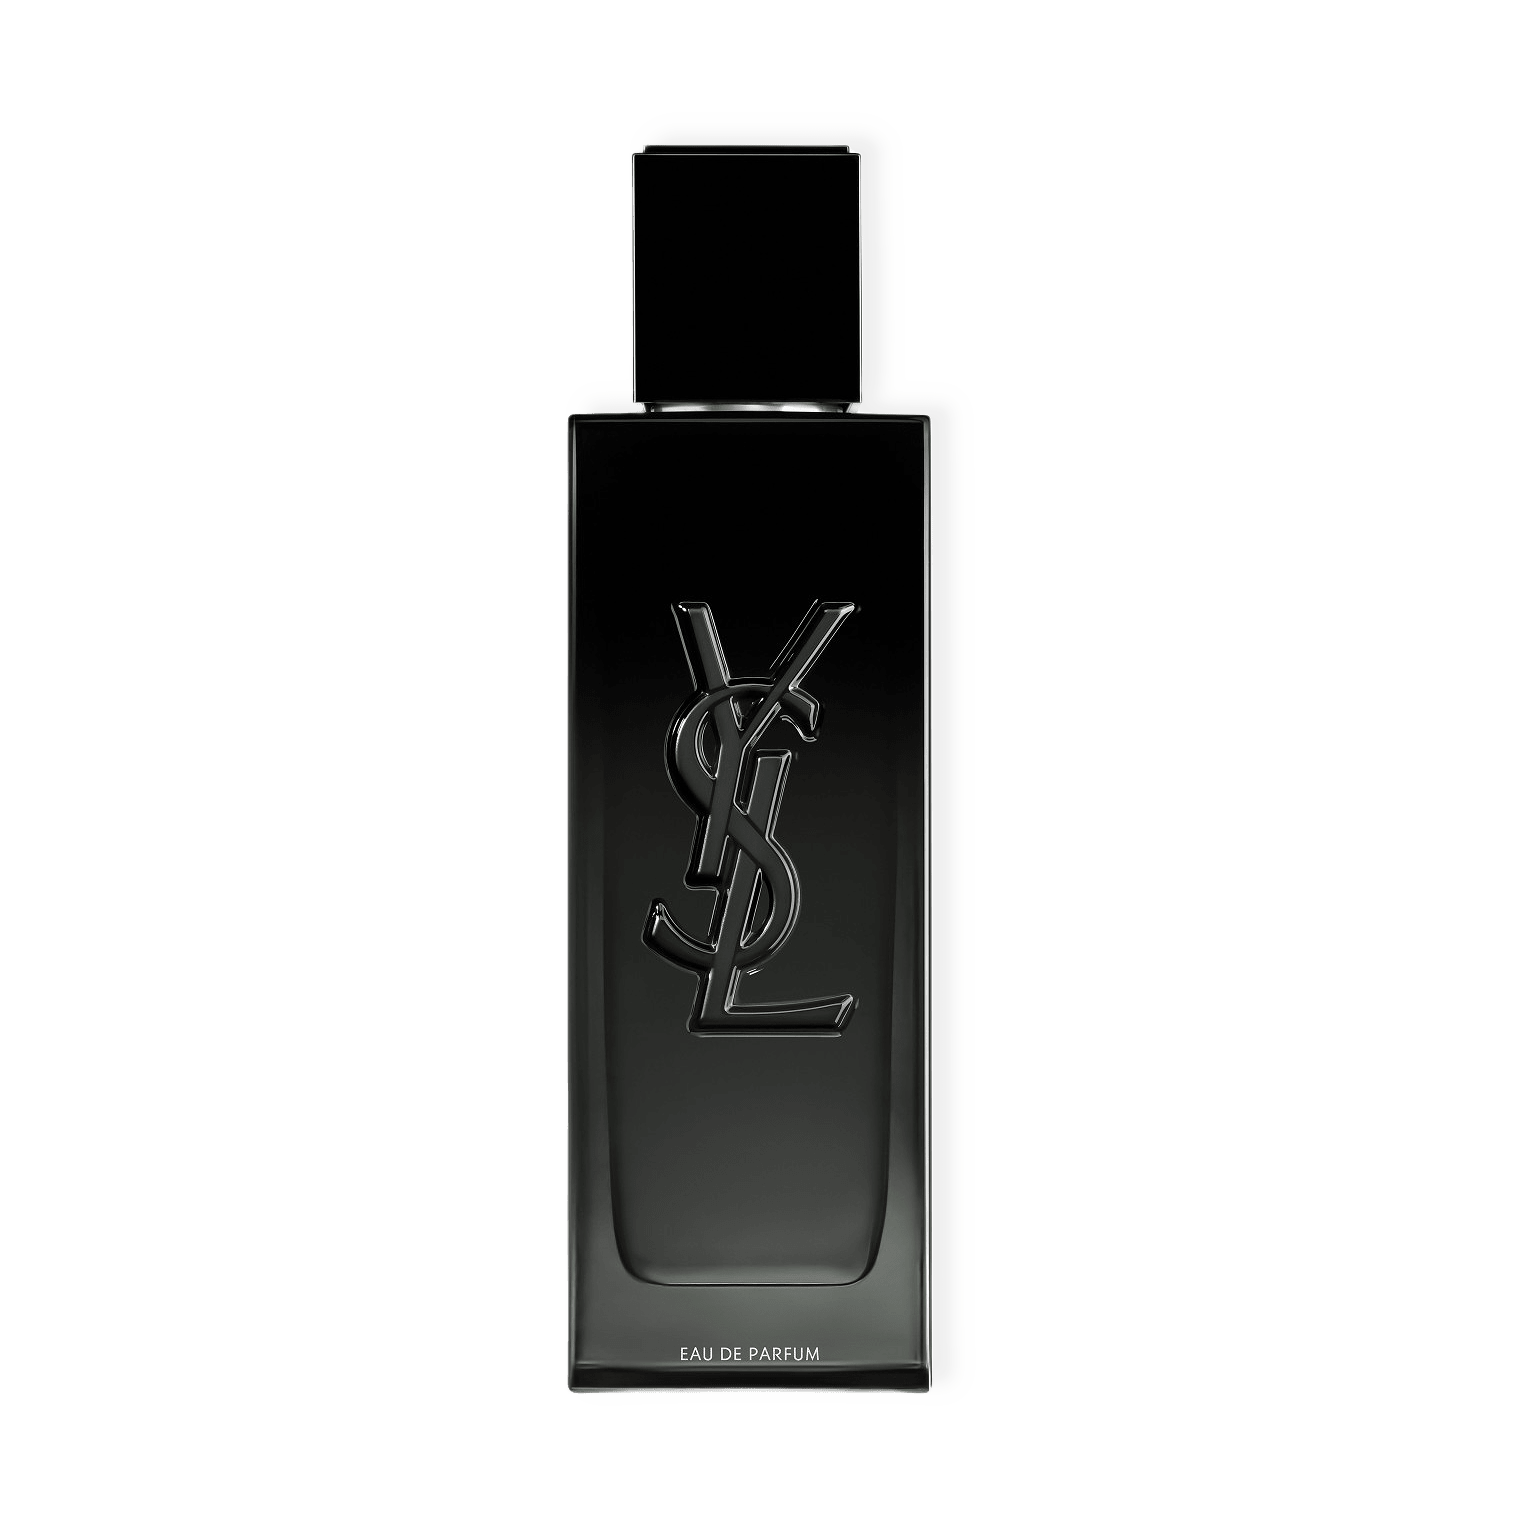 MYSLF Eau de Parfum från Yves Saint Laurent